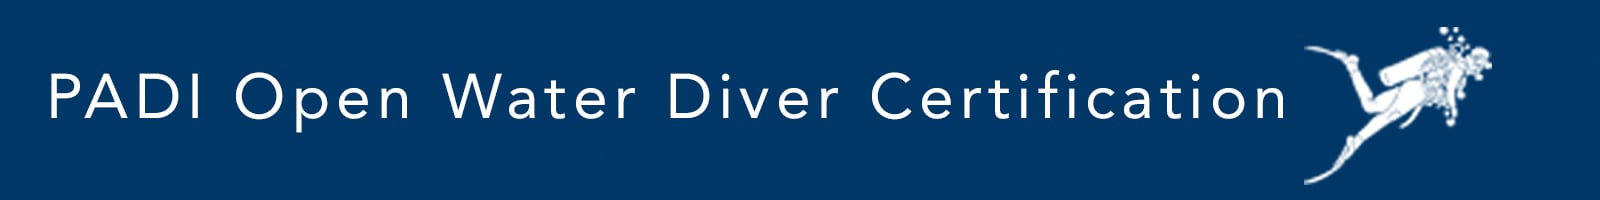 PADI Open Water Diver Certification | Vallarta Adventures